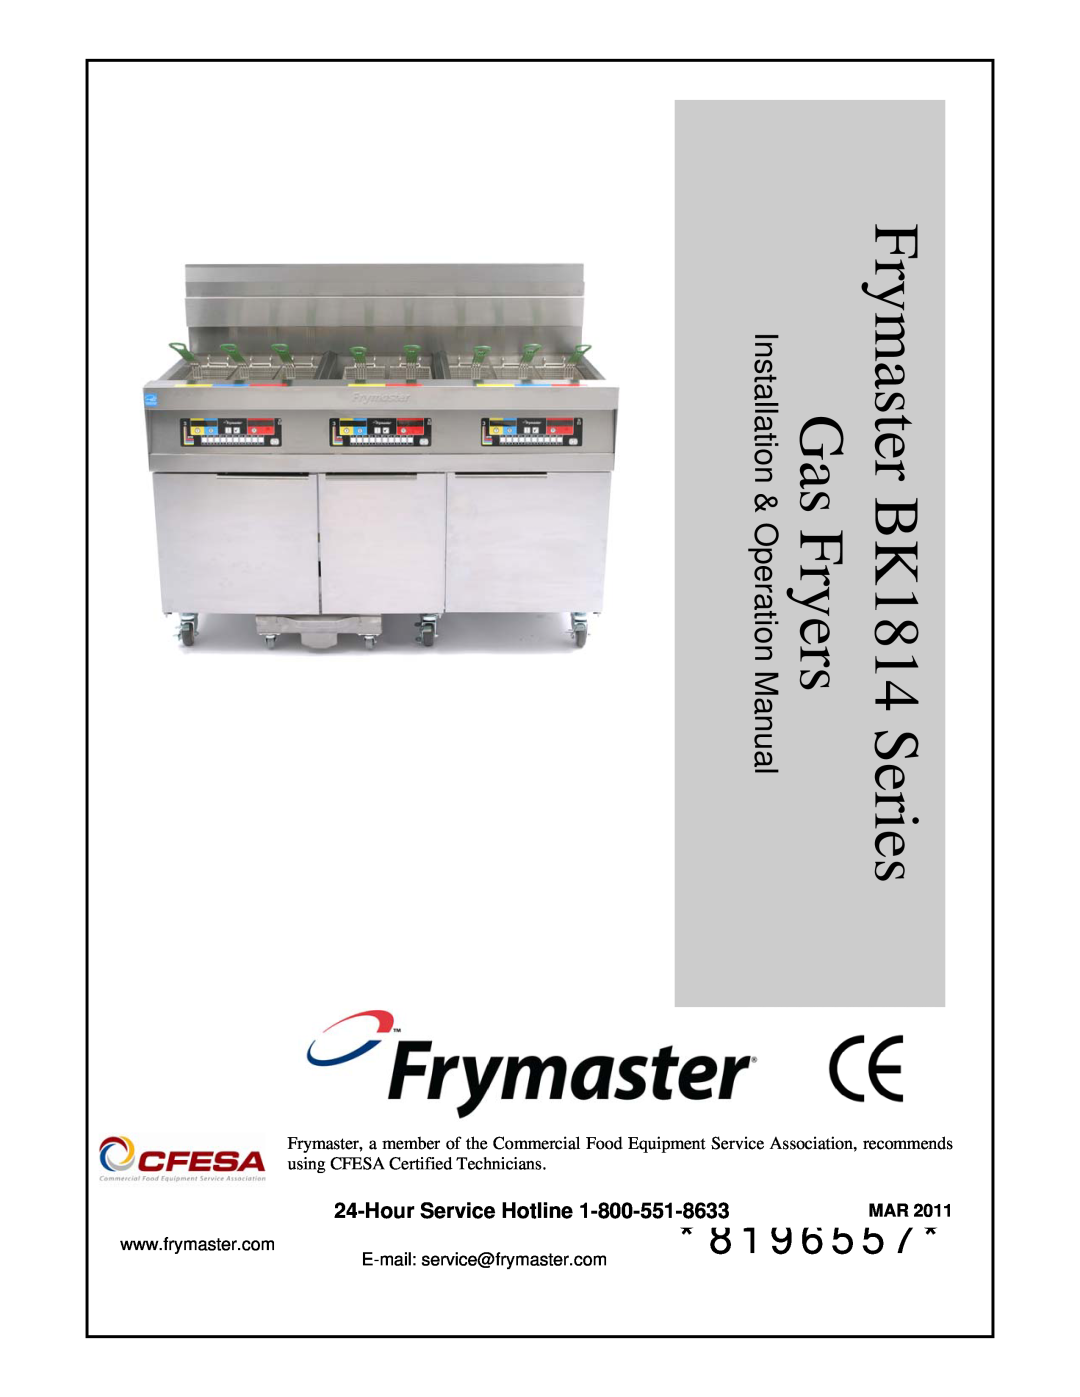 Frymaster operation manual 8196557, Hour Service Hotline, Frymaster BK1814 Series, Gas Fryers 